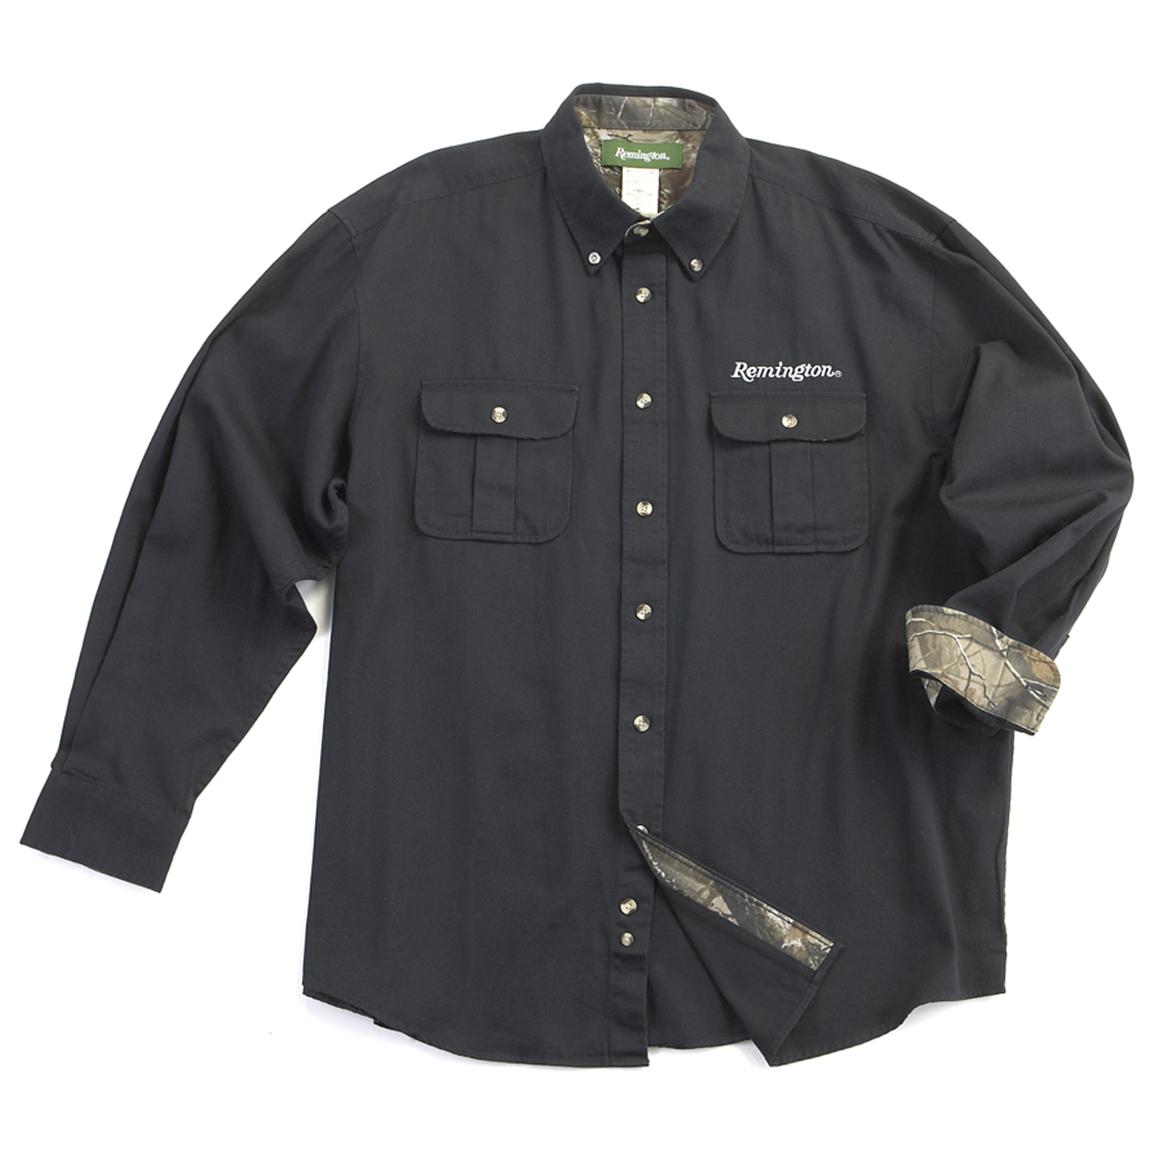 Remington® Long Sleeve Twill Shirt - 183525, Shirts at Sportsman's Guide